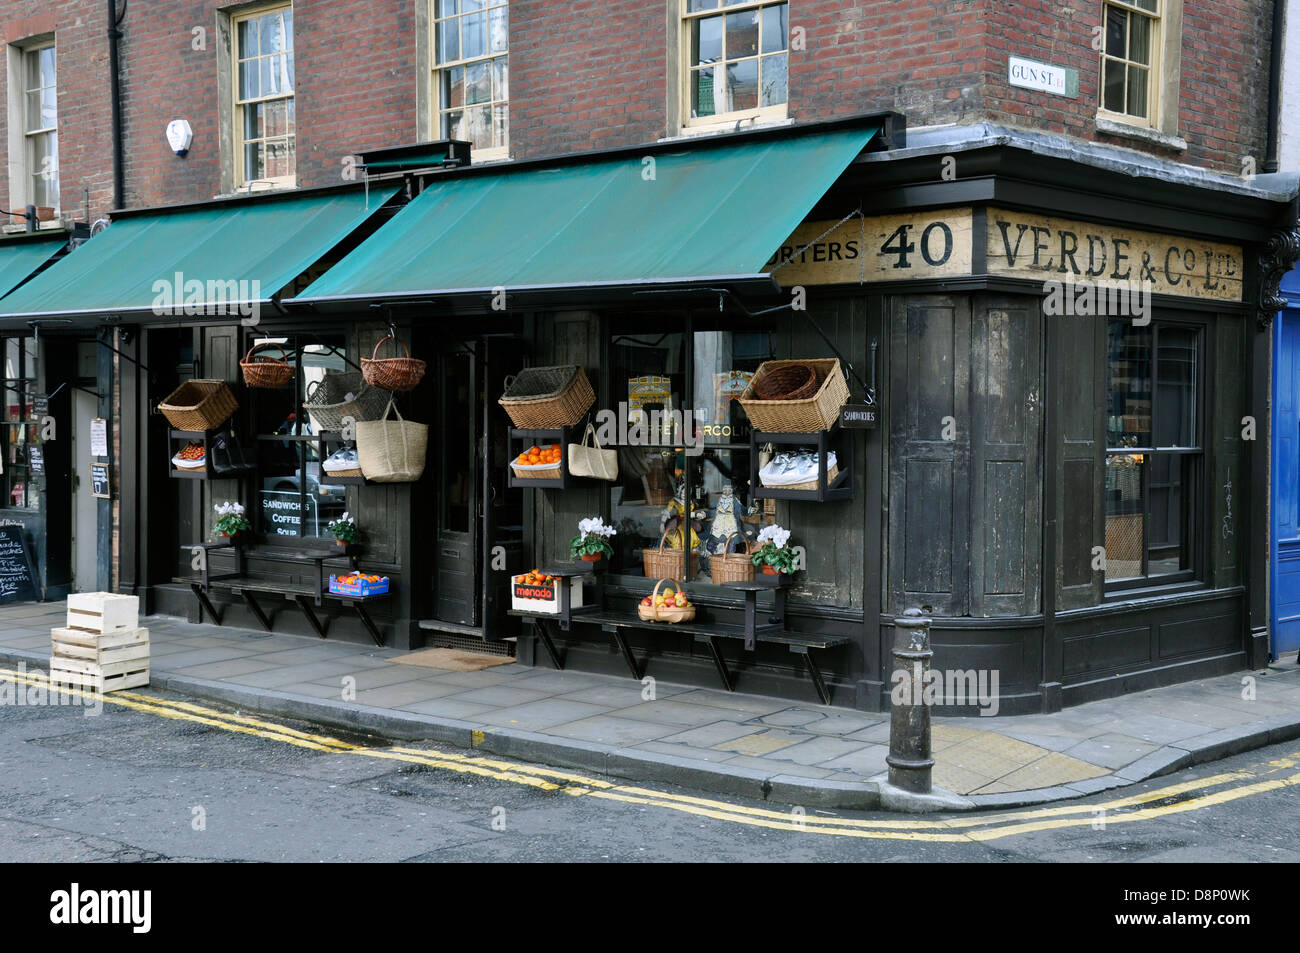 Alten shop, Verde & Co. Ltd, Delikatessen, gegenüber Markt Spitalfields, East London, England, UK. Stockfoto